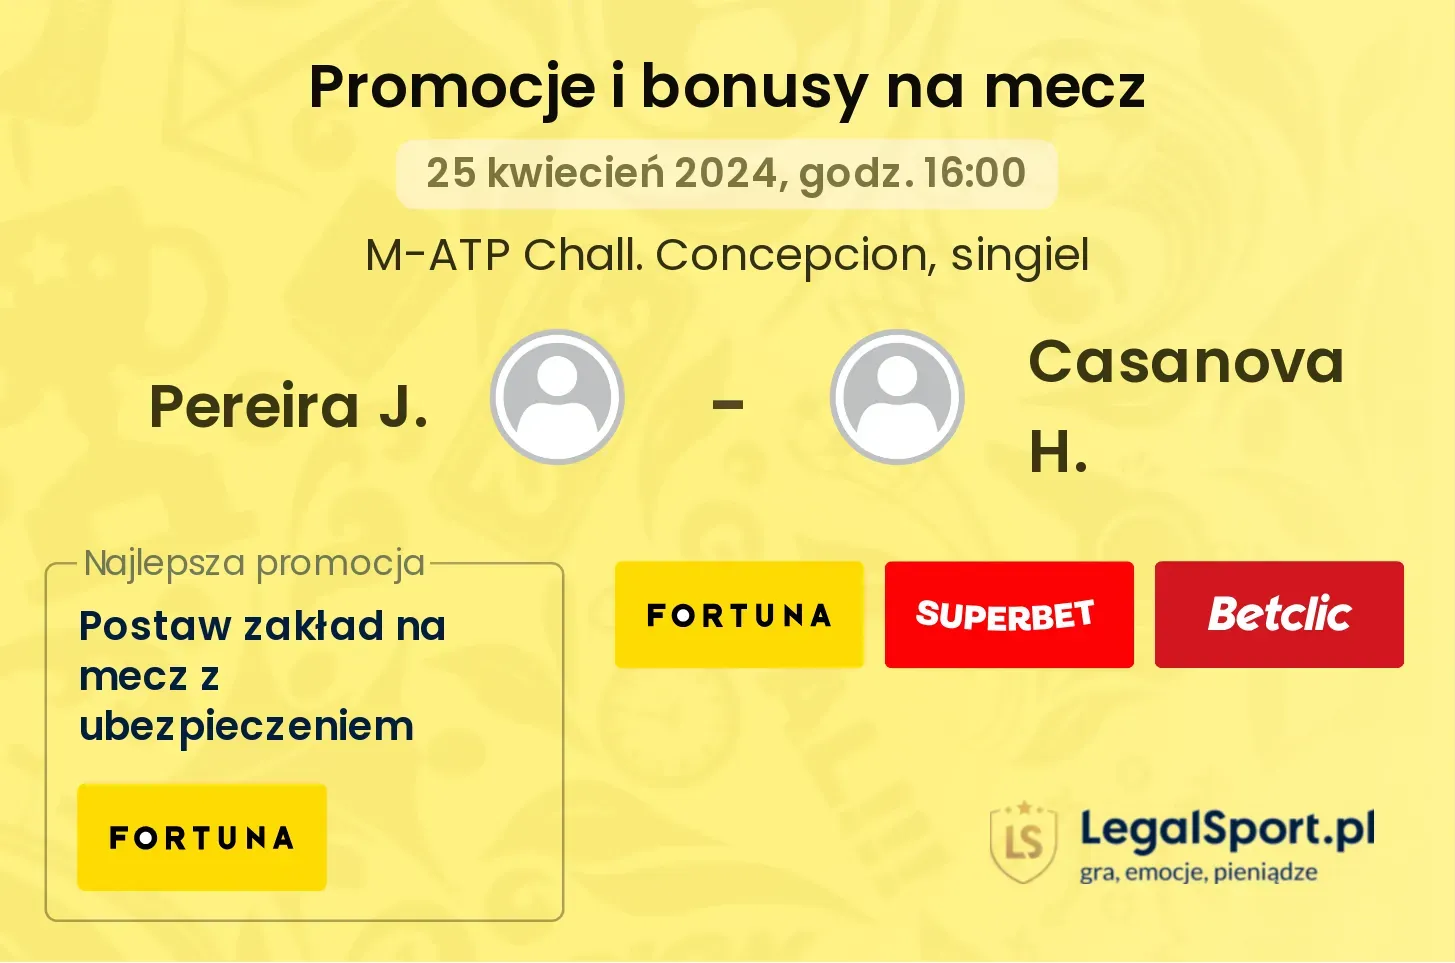 Pereira J. - Casanova H. promocje bonusy na mecz